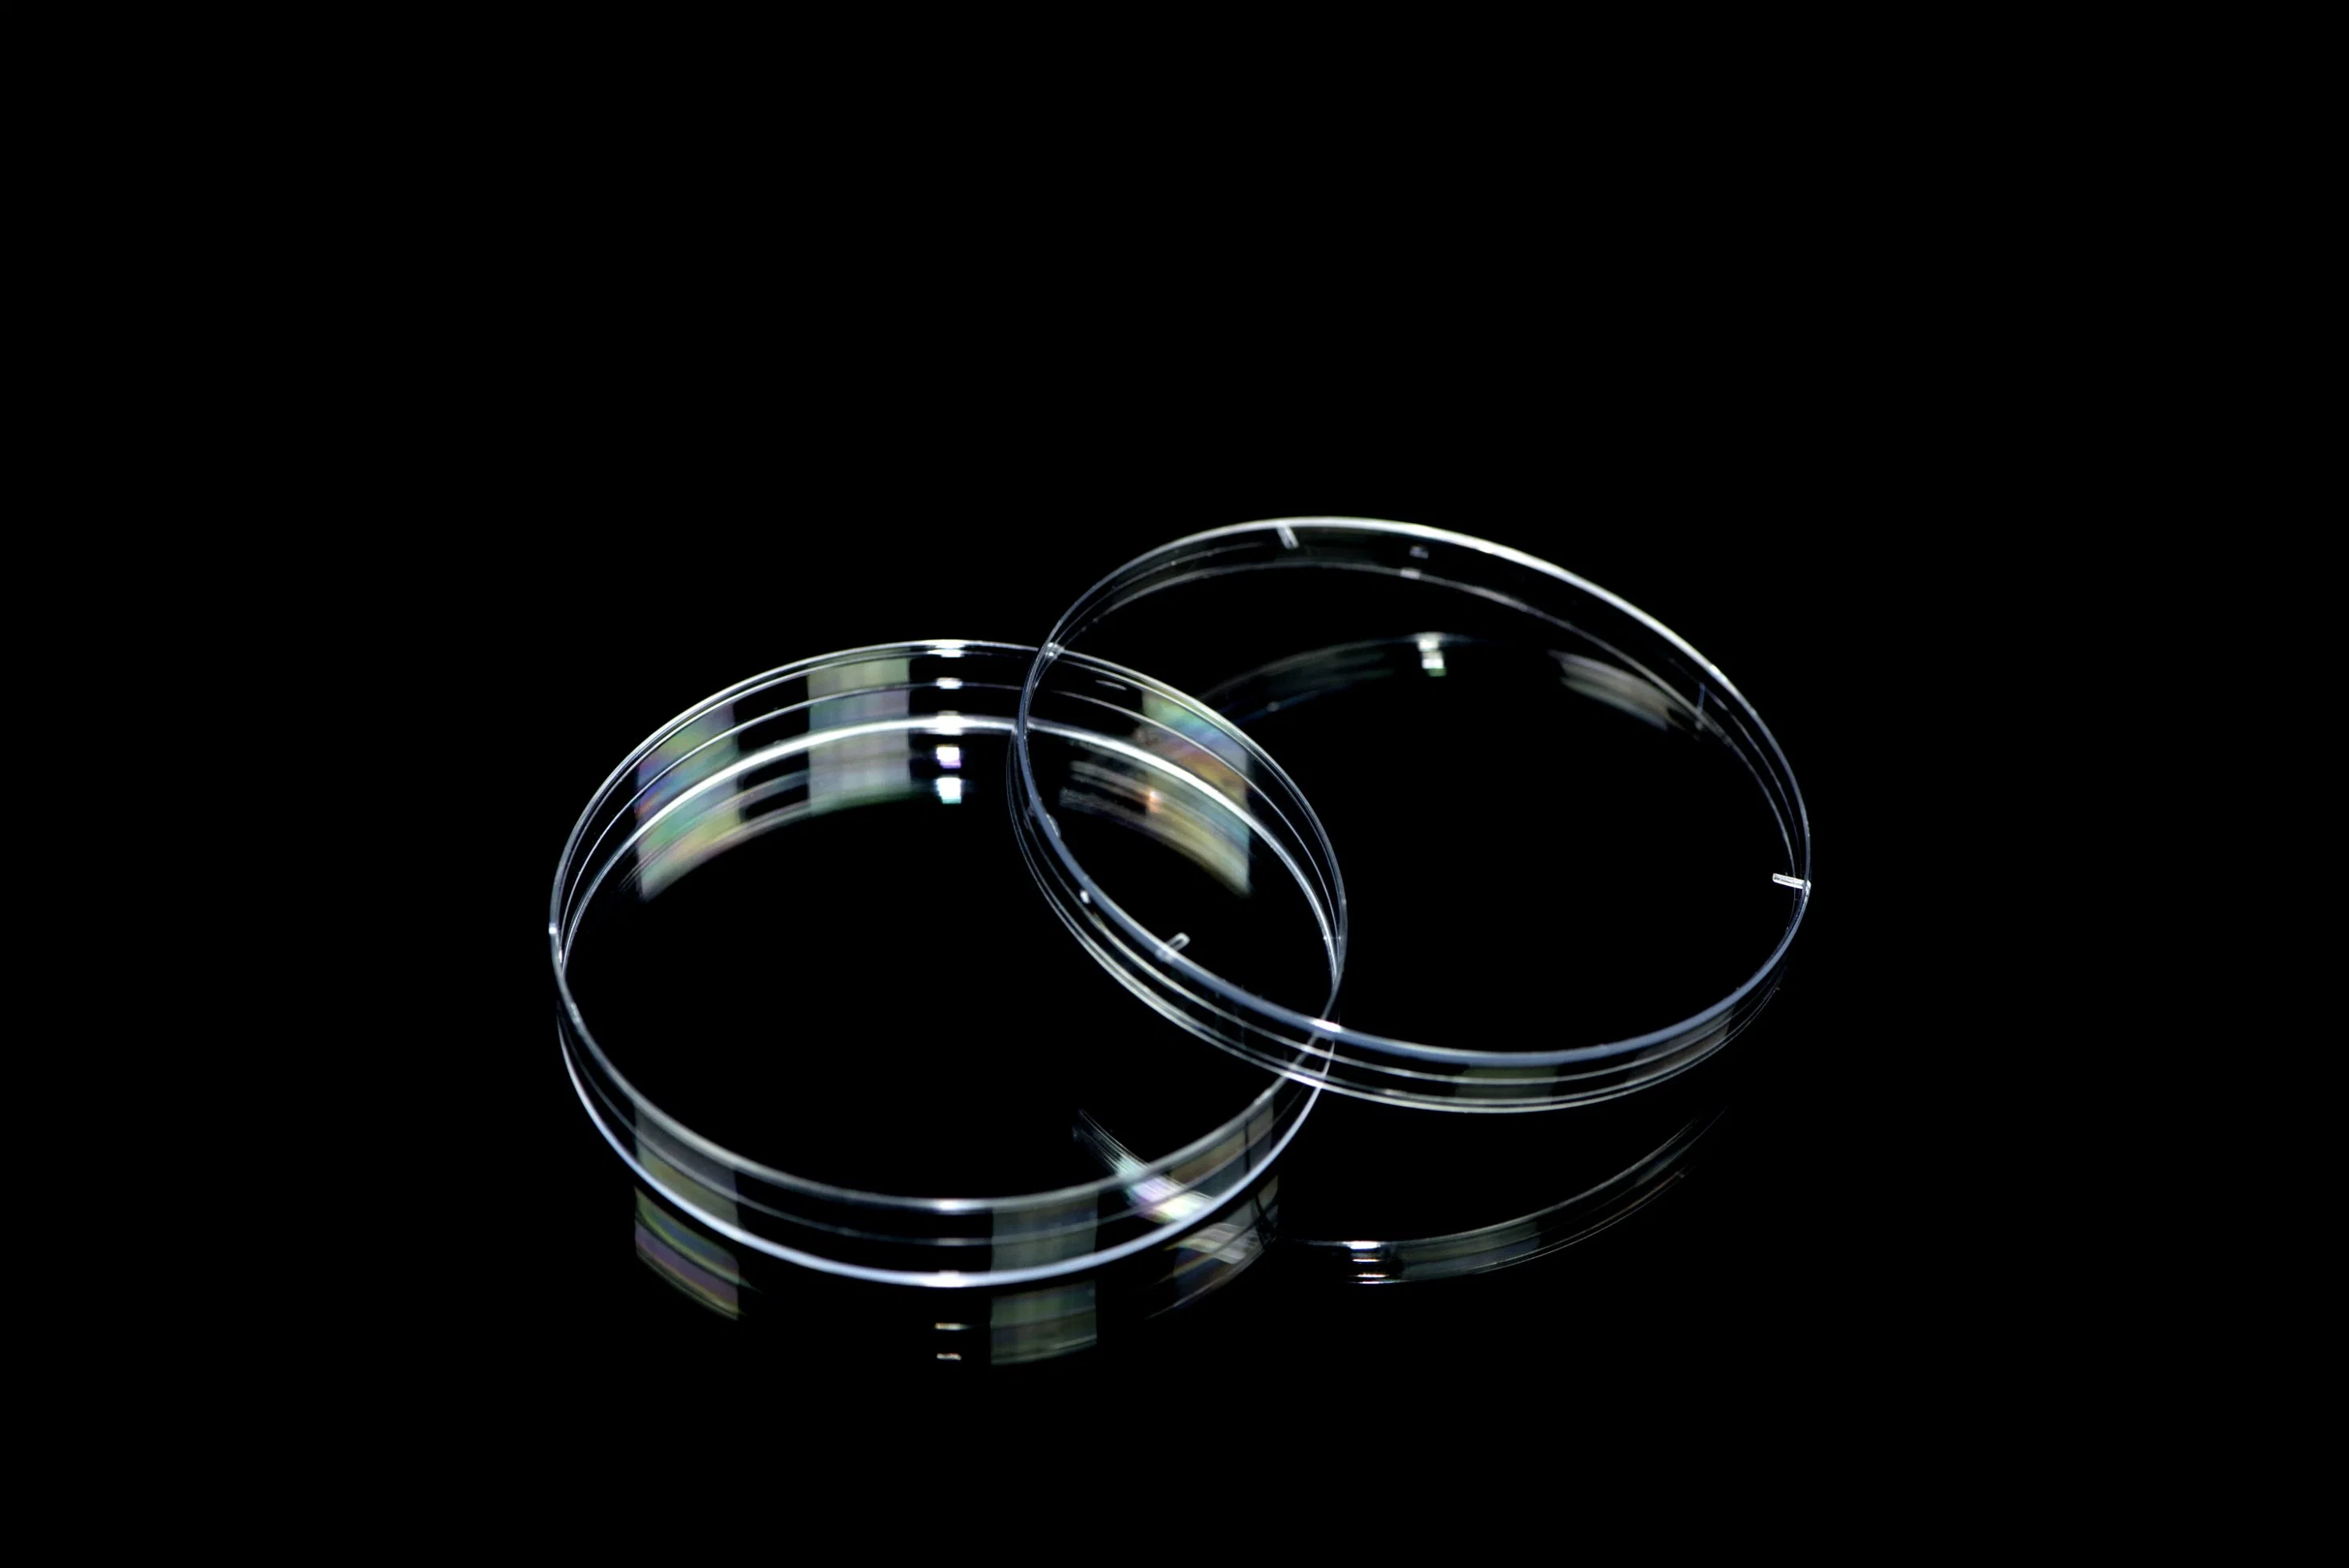 Plastic Laboratory Sterilized Disposable 90mm*15mm Sterile Petri Culture Dishes with Lids